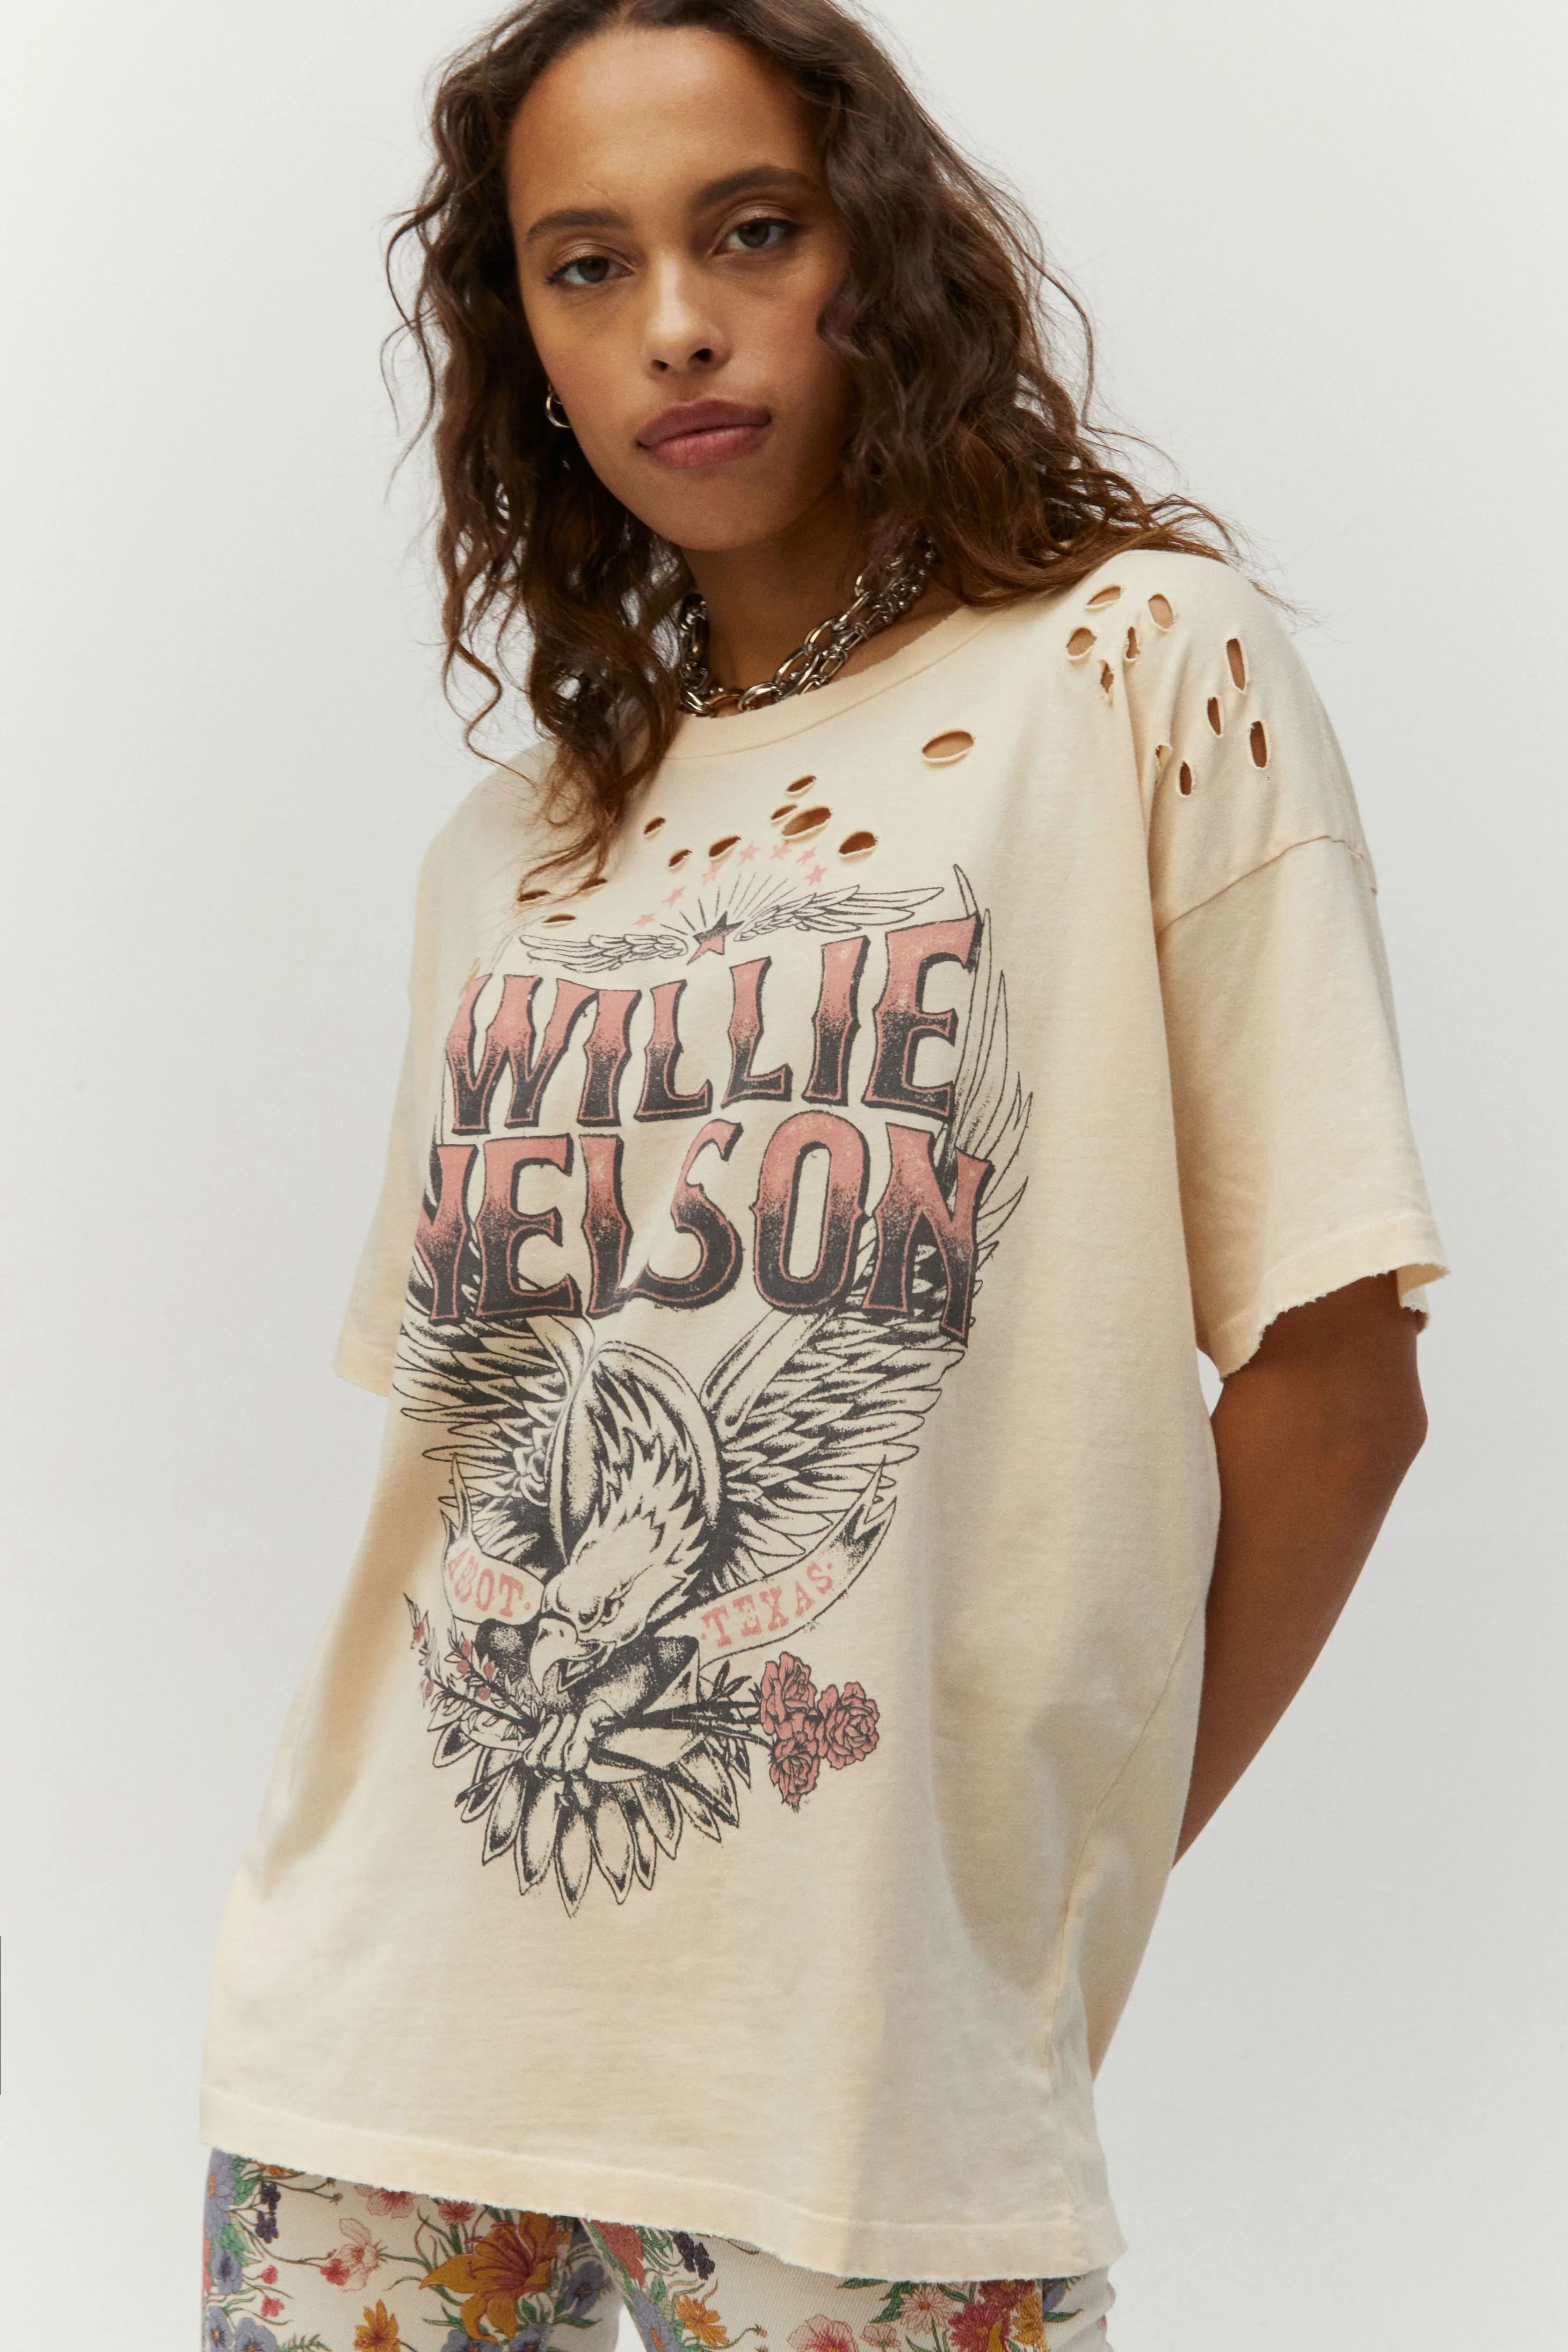 Willie Nelson Eagle Merch Tee | Daydreamer